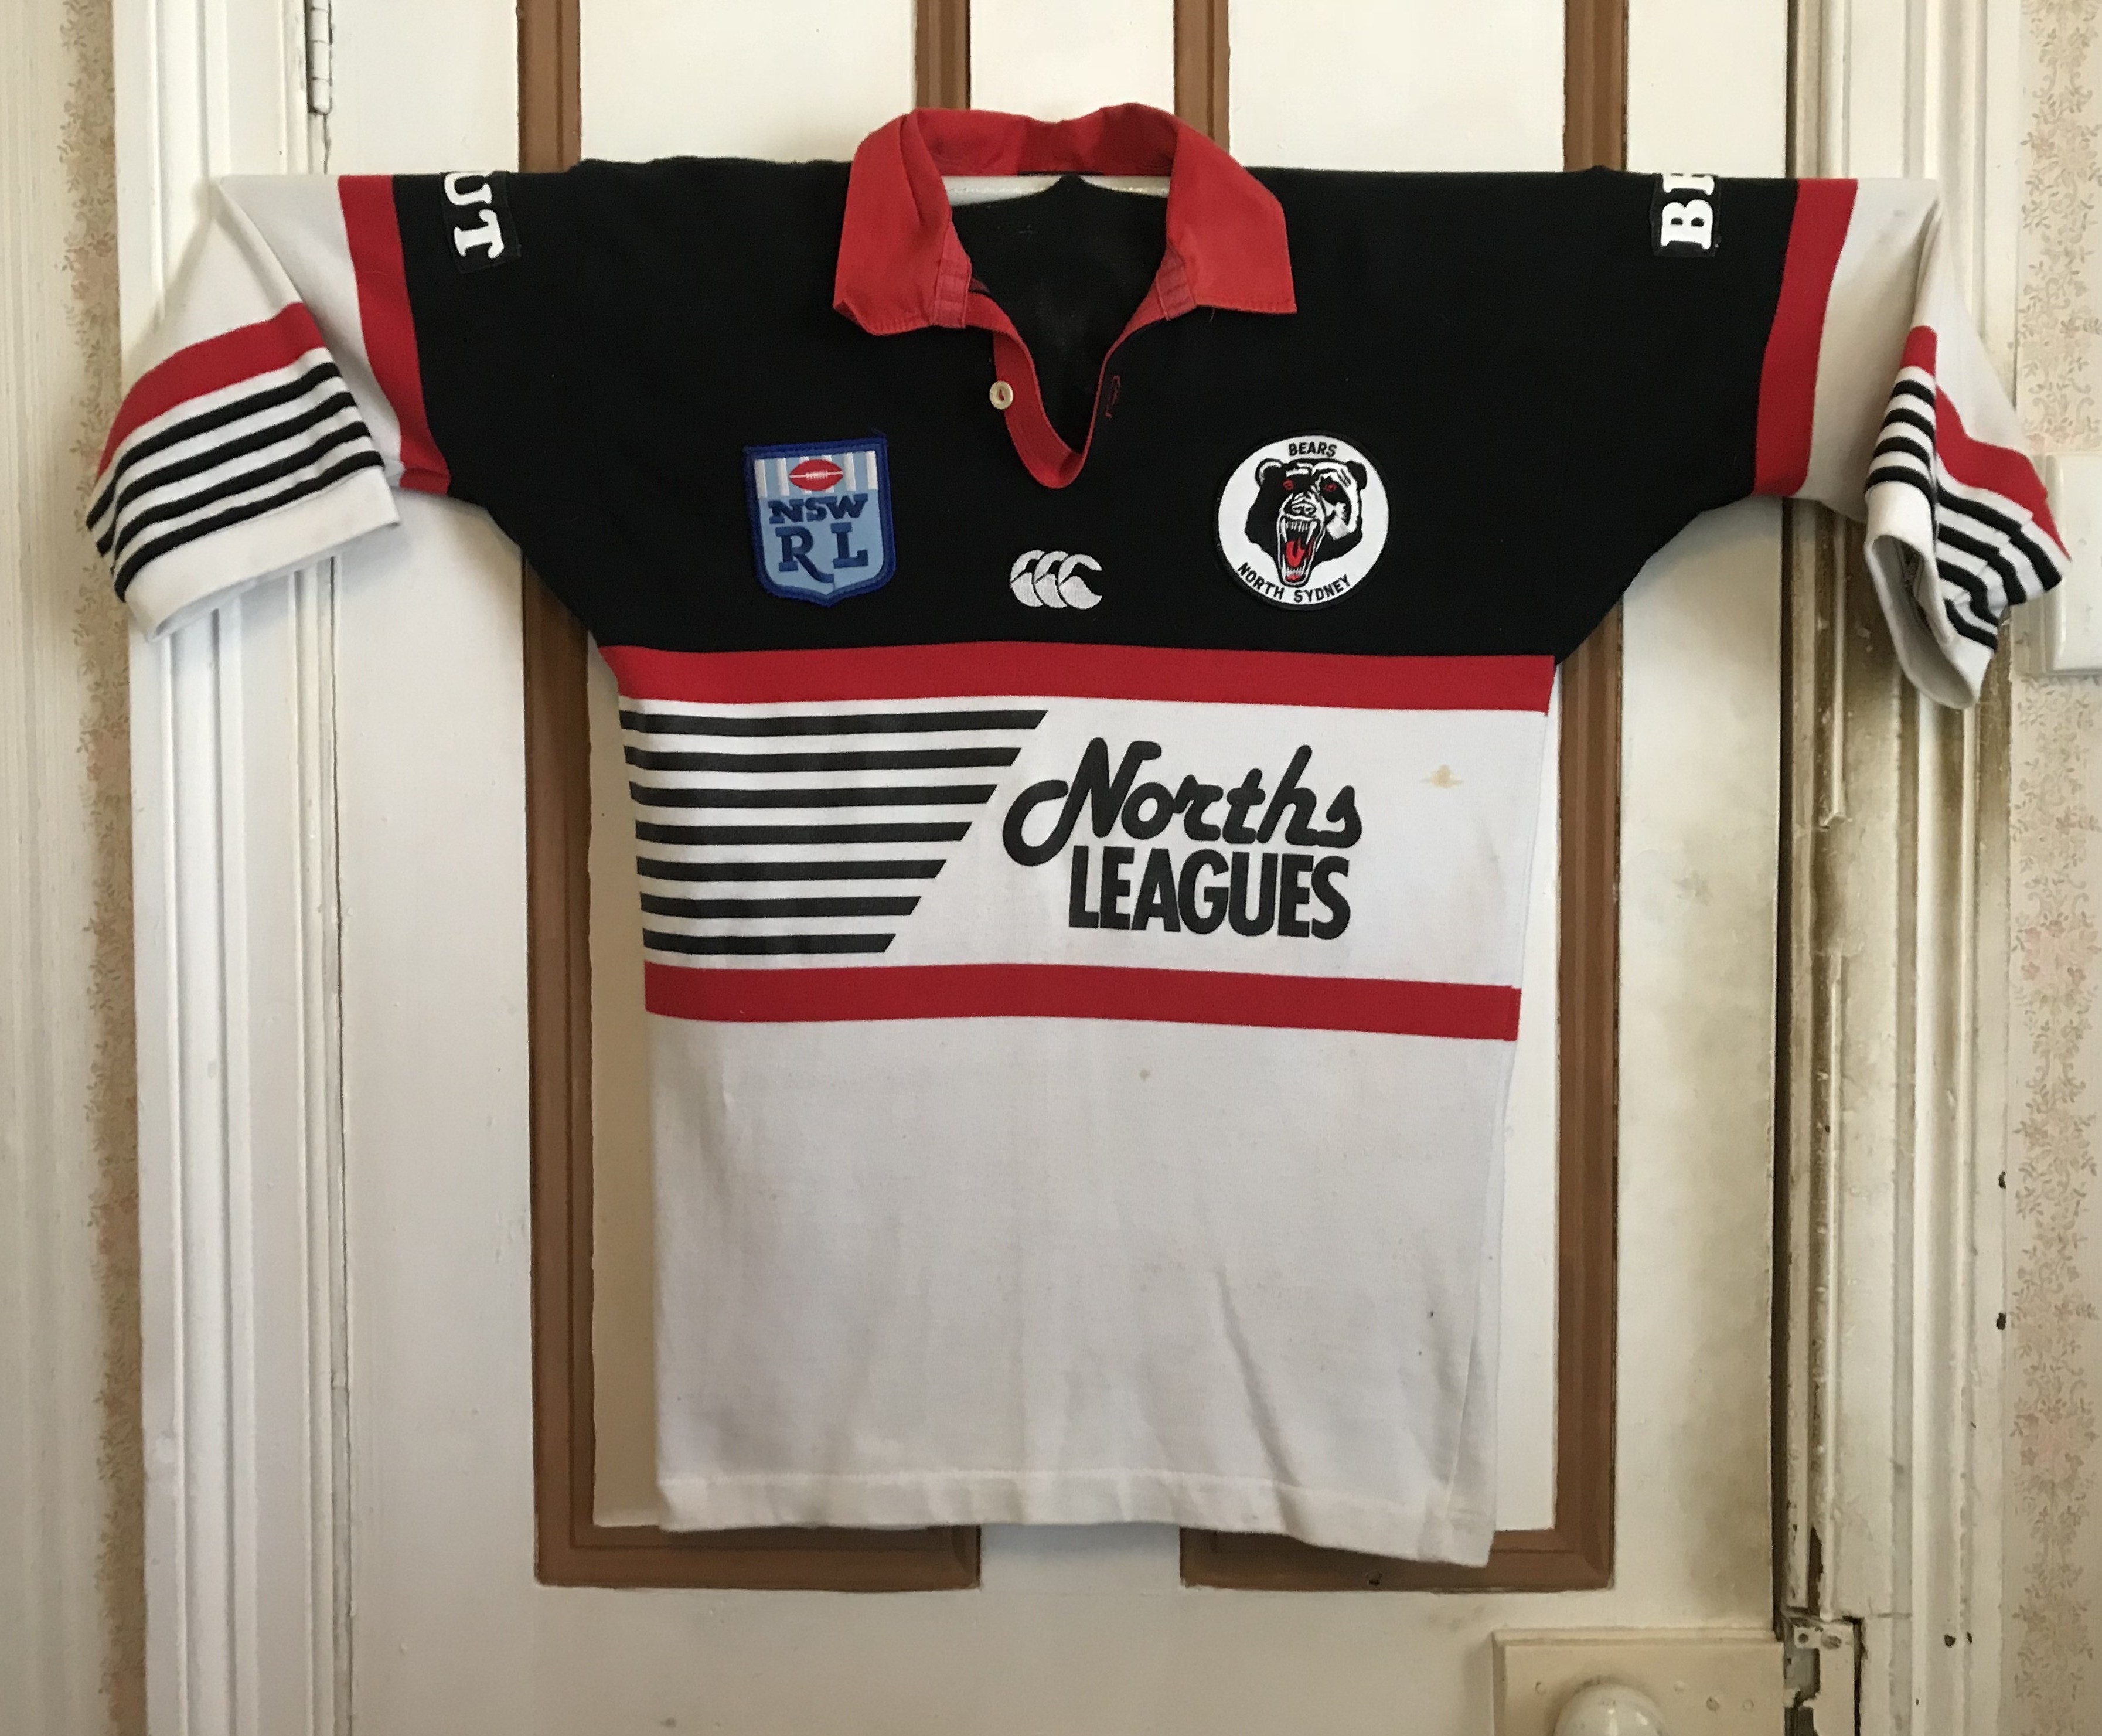 1994 bears jersey